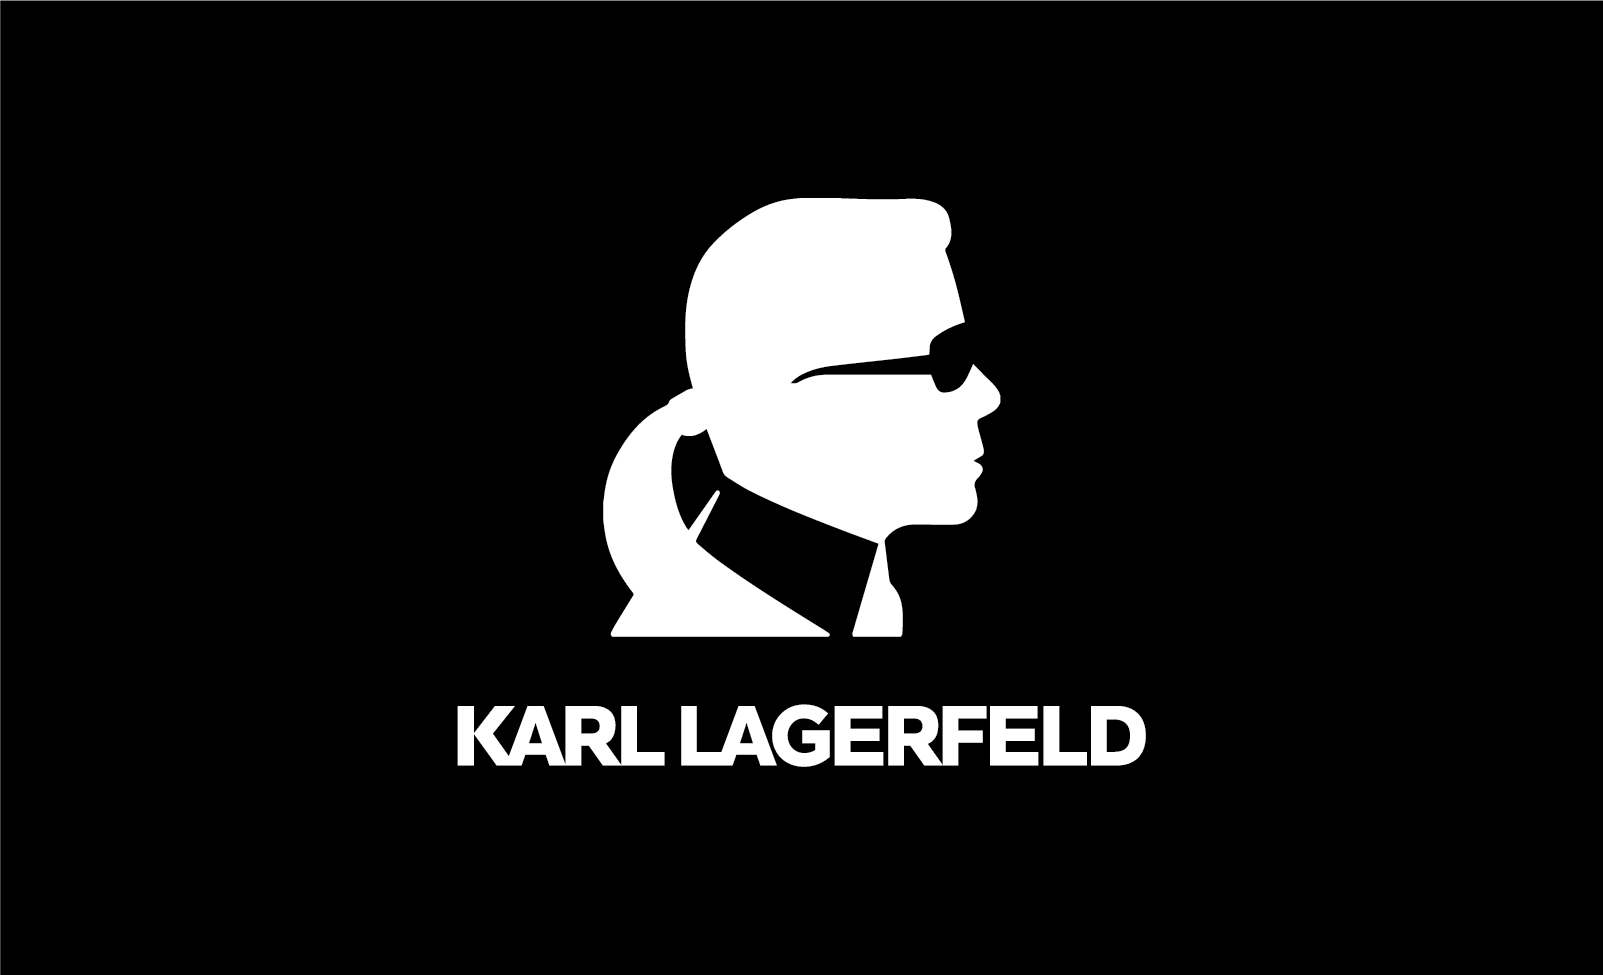 Karl Lagerfeld Logo : Karl Lagerfeld : The karl lagerfeld logo design ...